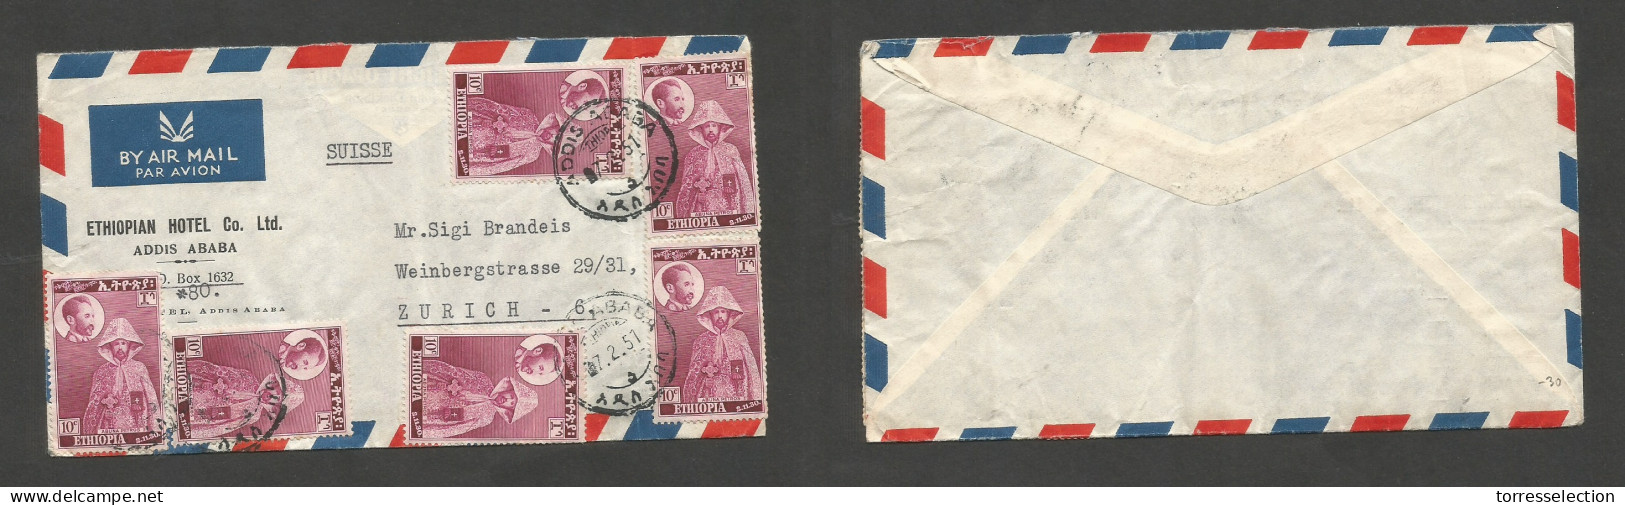 ETHIOPIA. 1951 (7 Febr) Addis Ababa - Zurich, Switzerland. Air Multifkd Env, Tied Cds, At 60c Rate. V. Appealing. - Ethiopië